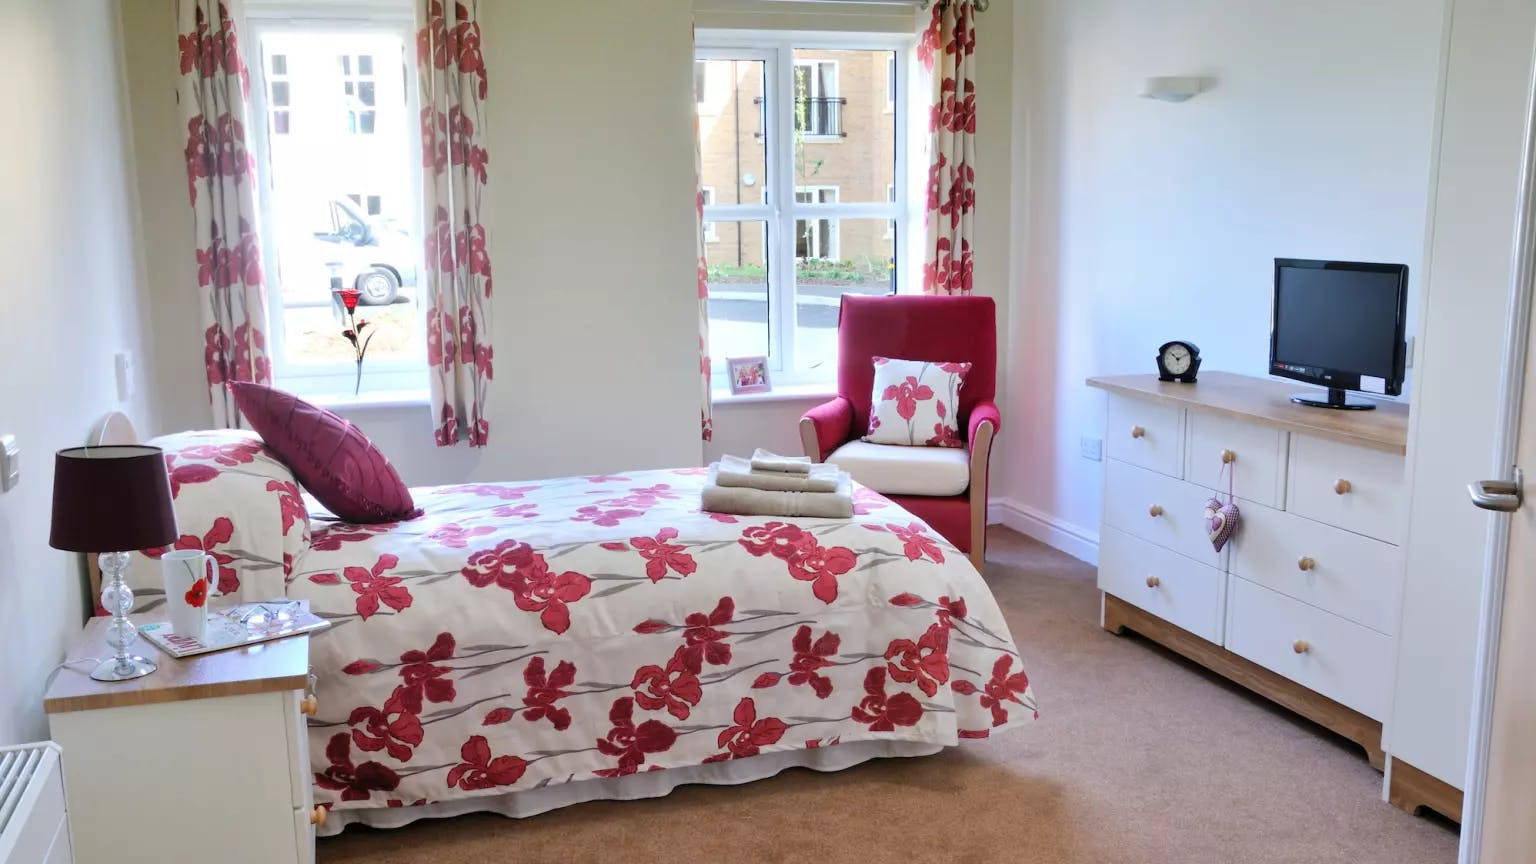 Bedroom of Jubilee Court care home in Stevenage, Hertfordshire